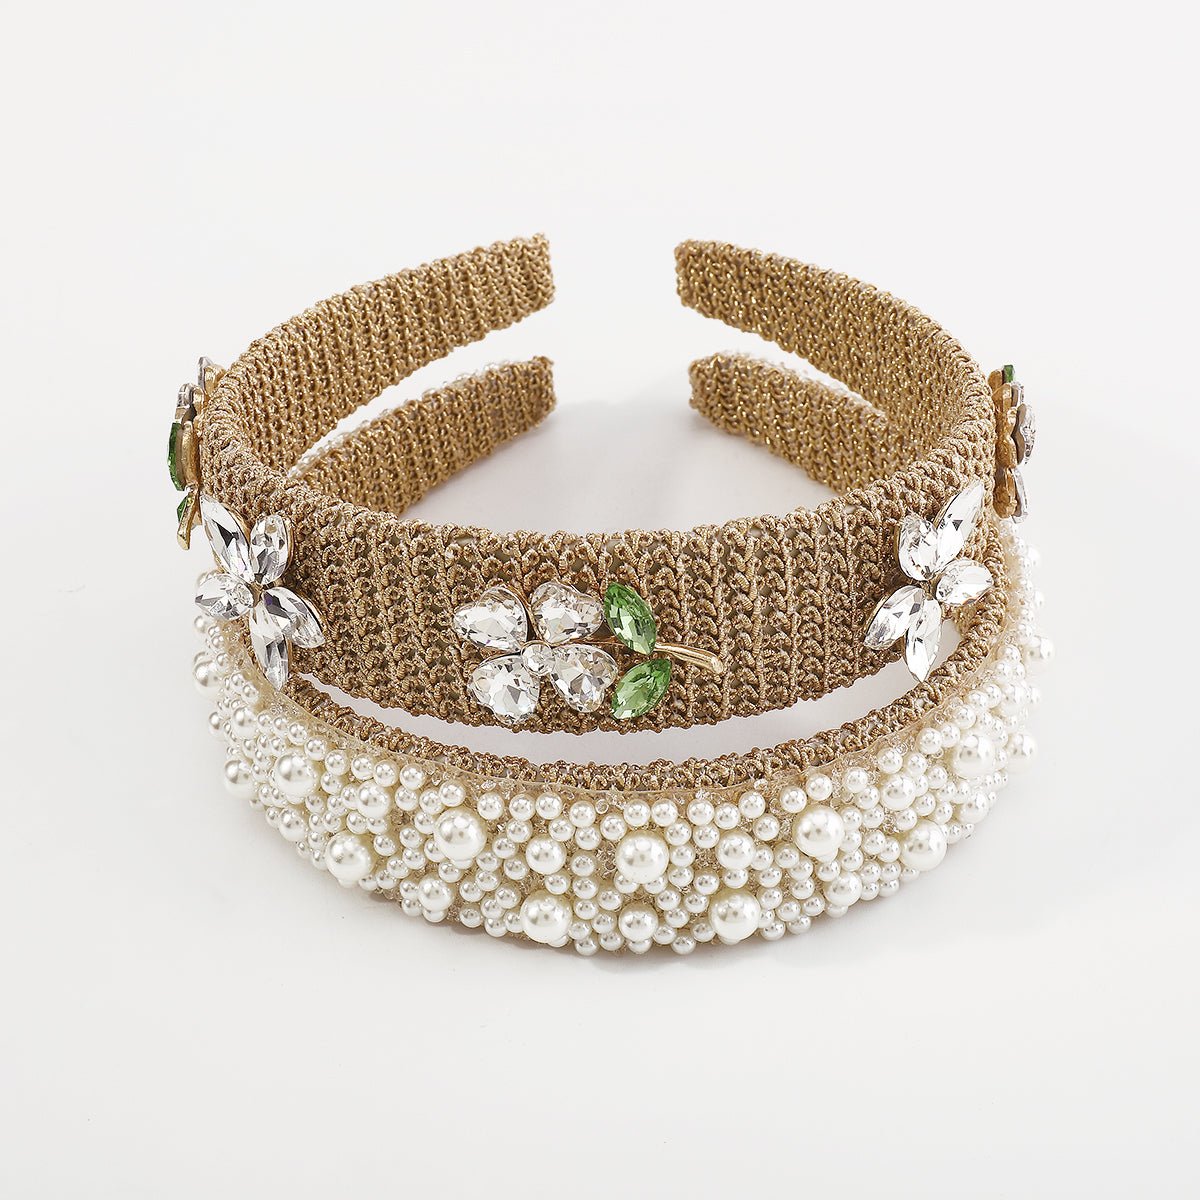 Temperament Full Pearls & Crystal Flower Hairbands medyjewelry